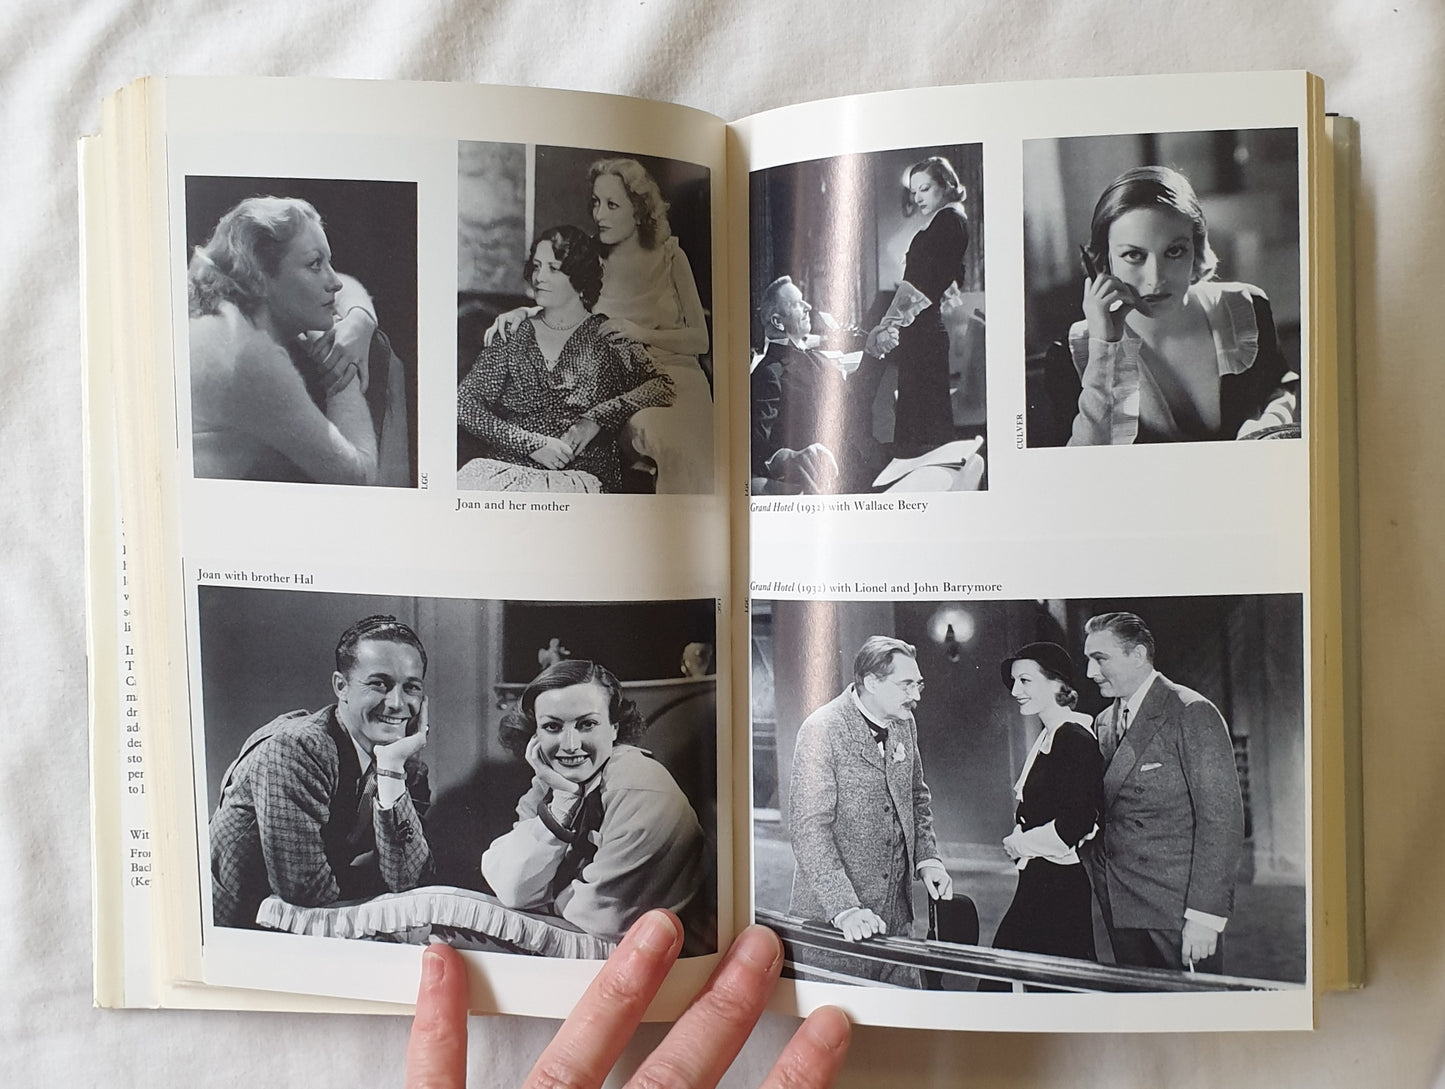 Joan Crawford by Bob Thomas